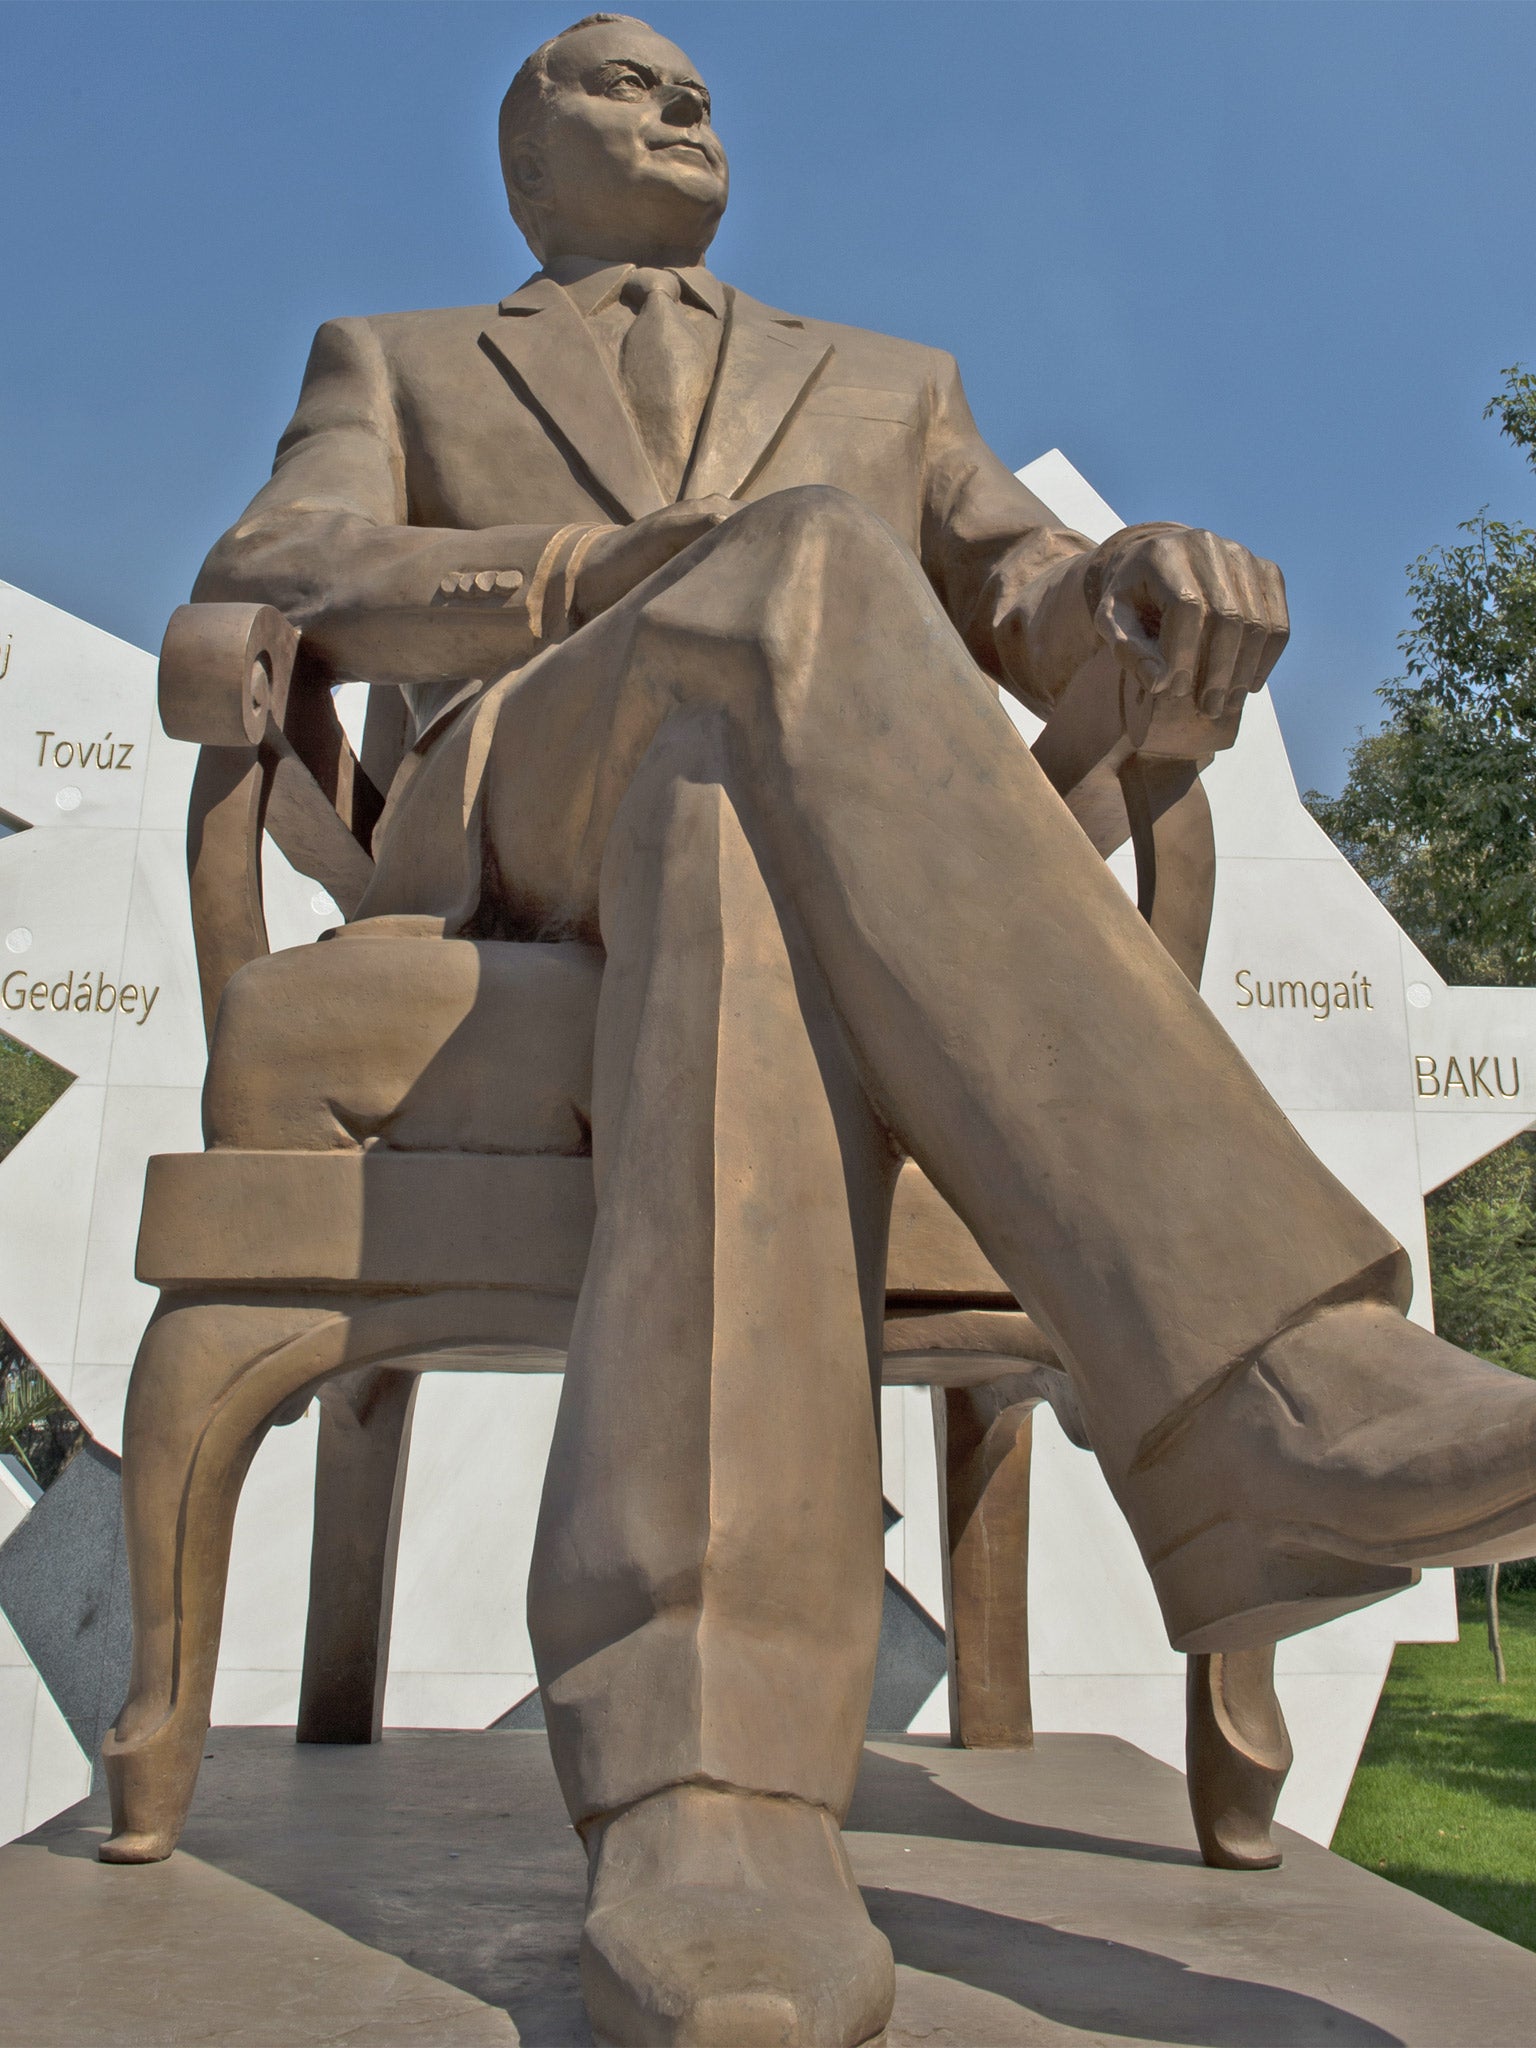 The statue of the former president of Azerbaijan, Heydar Aliyev, in Mexico City